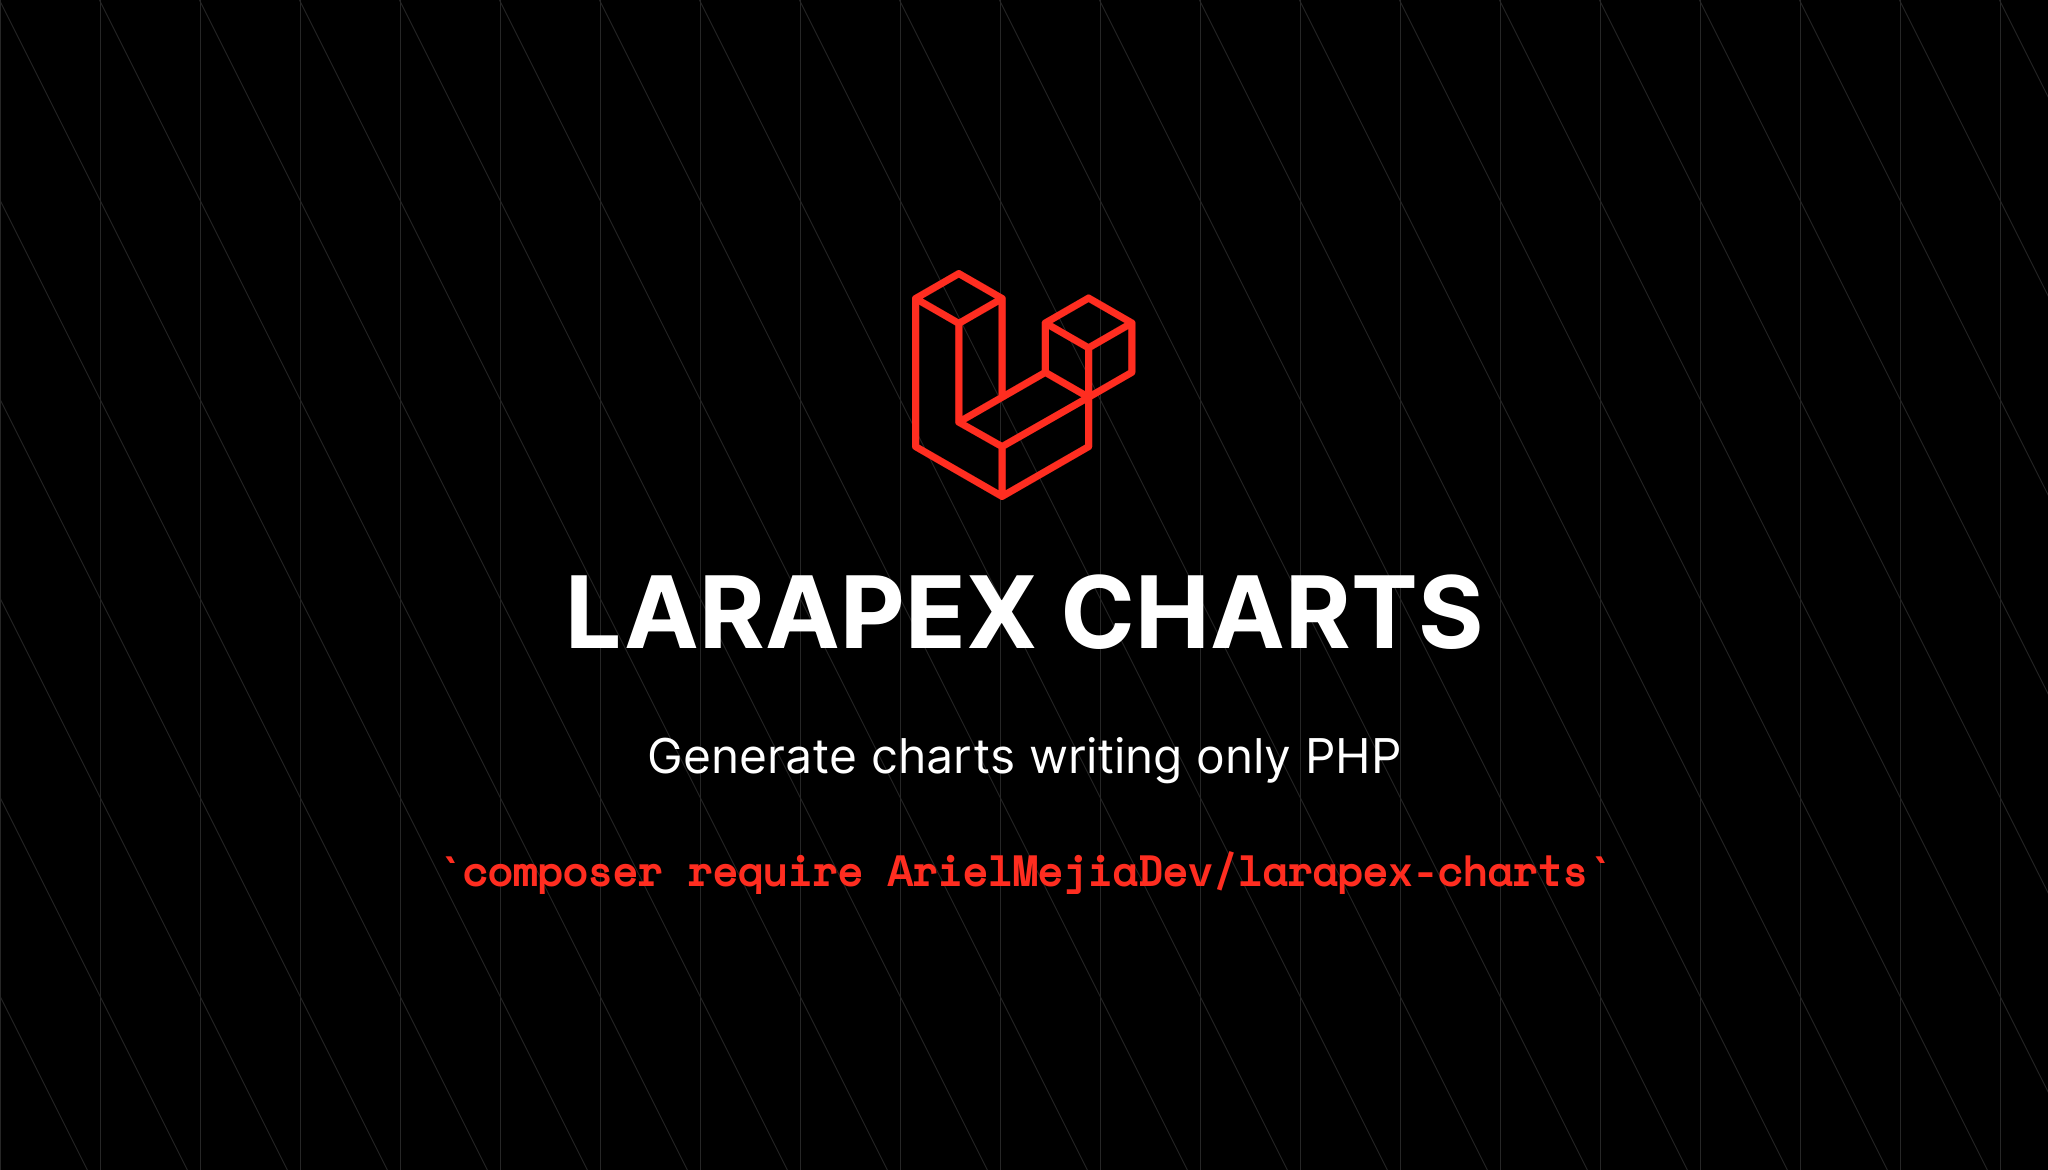 Larapex Charts banner